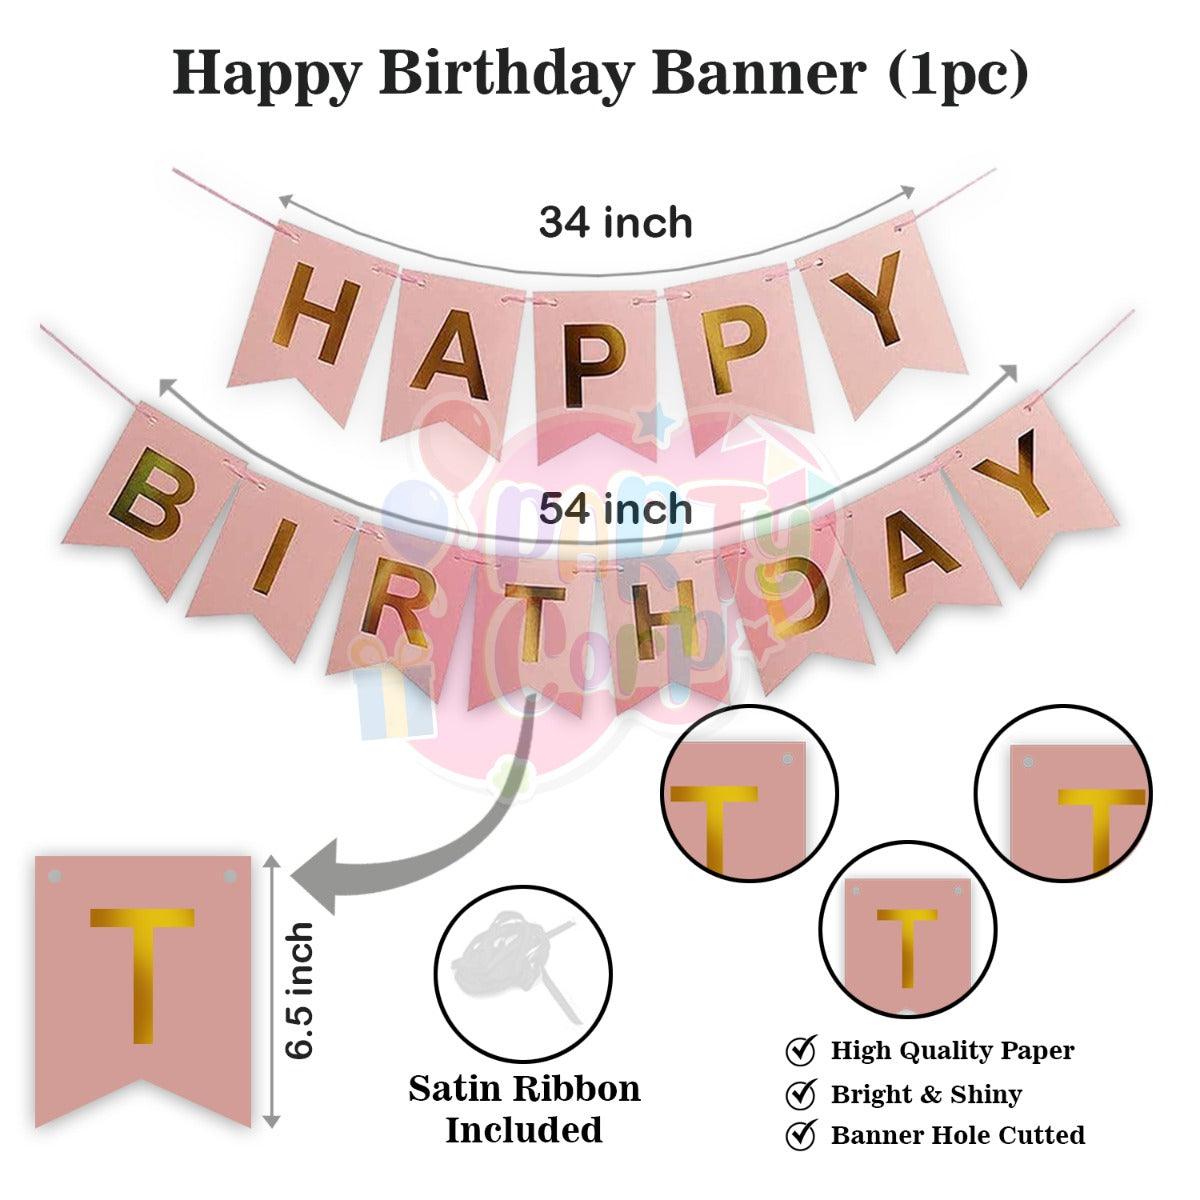 PartyCorp Happy Birthday Decoration Kit Combo 94 Pcs - White, Pink Latex, Gold Chrome & Confetti Balloons, Pink & Gold Happy Birthday Banner, Gold Curtain